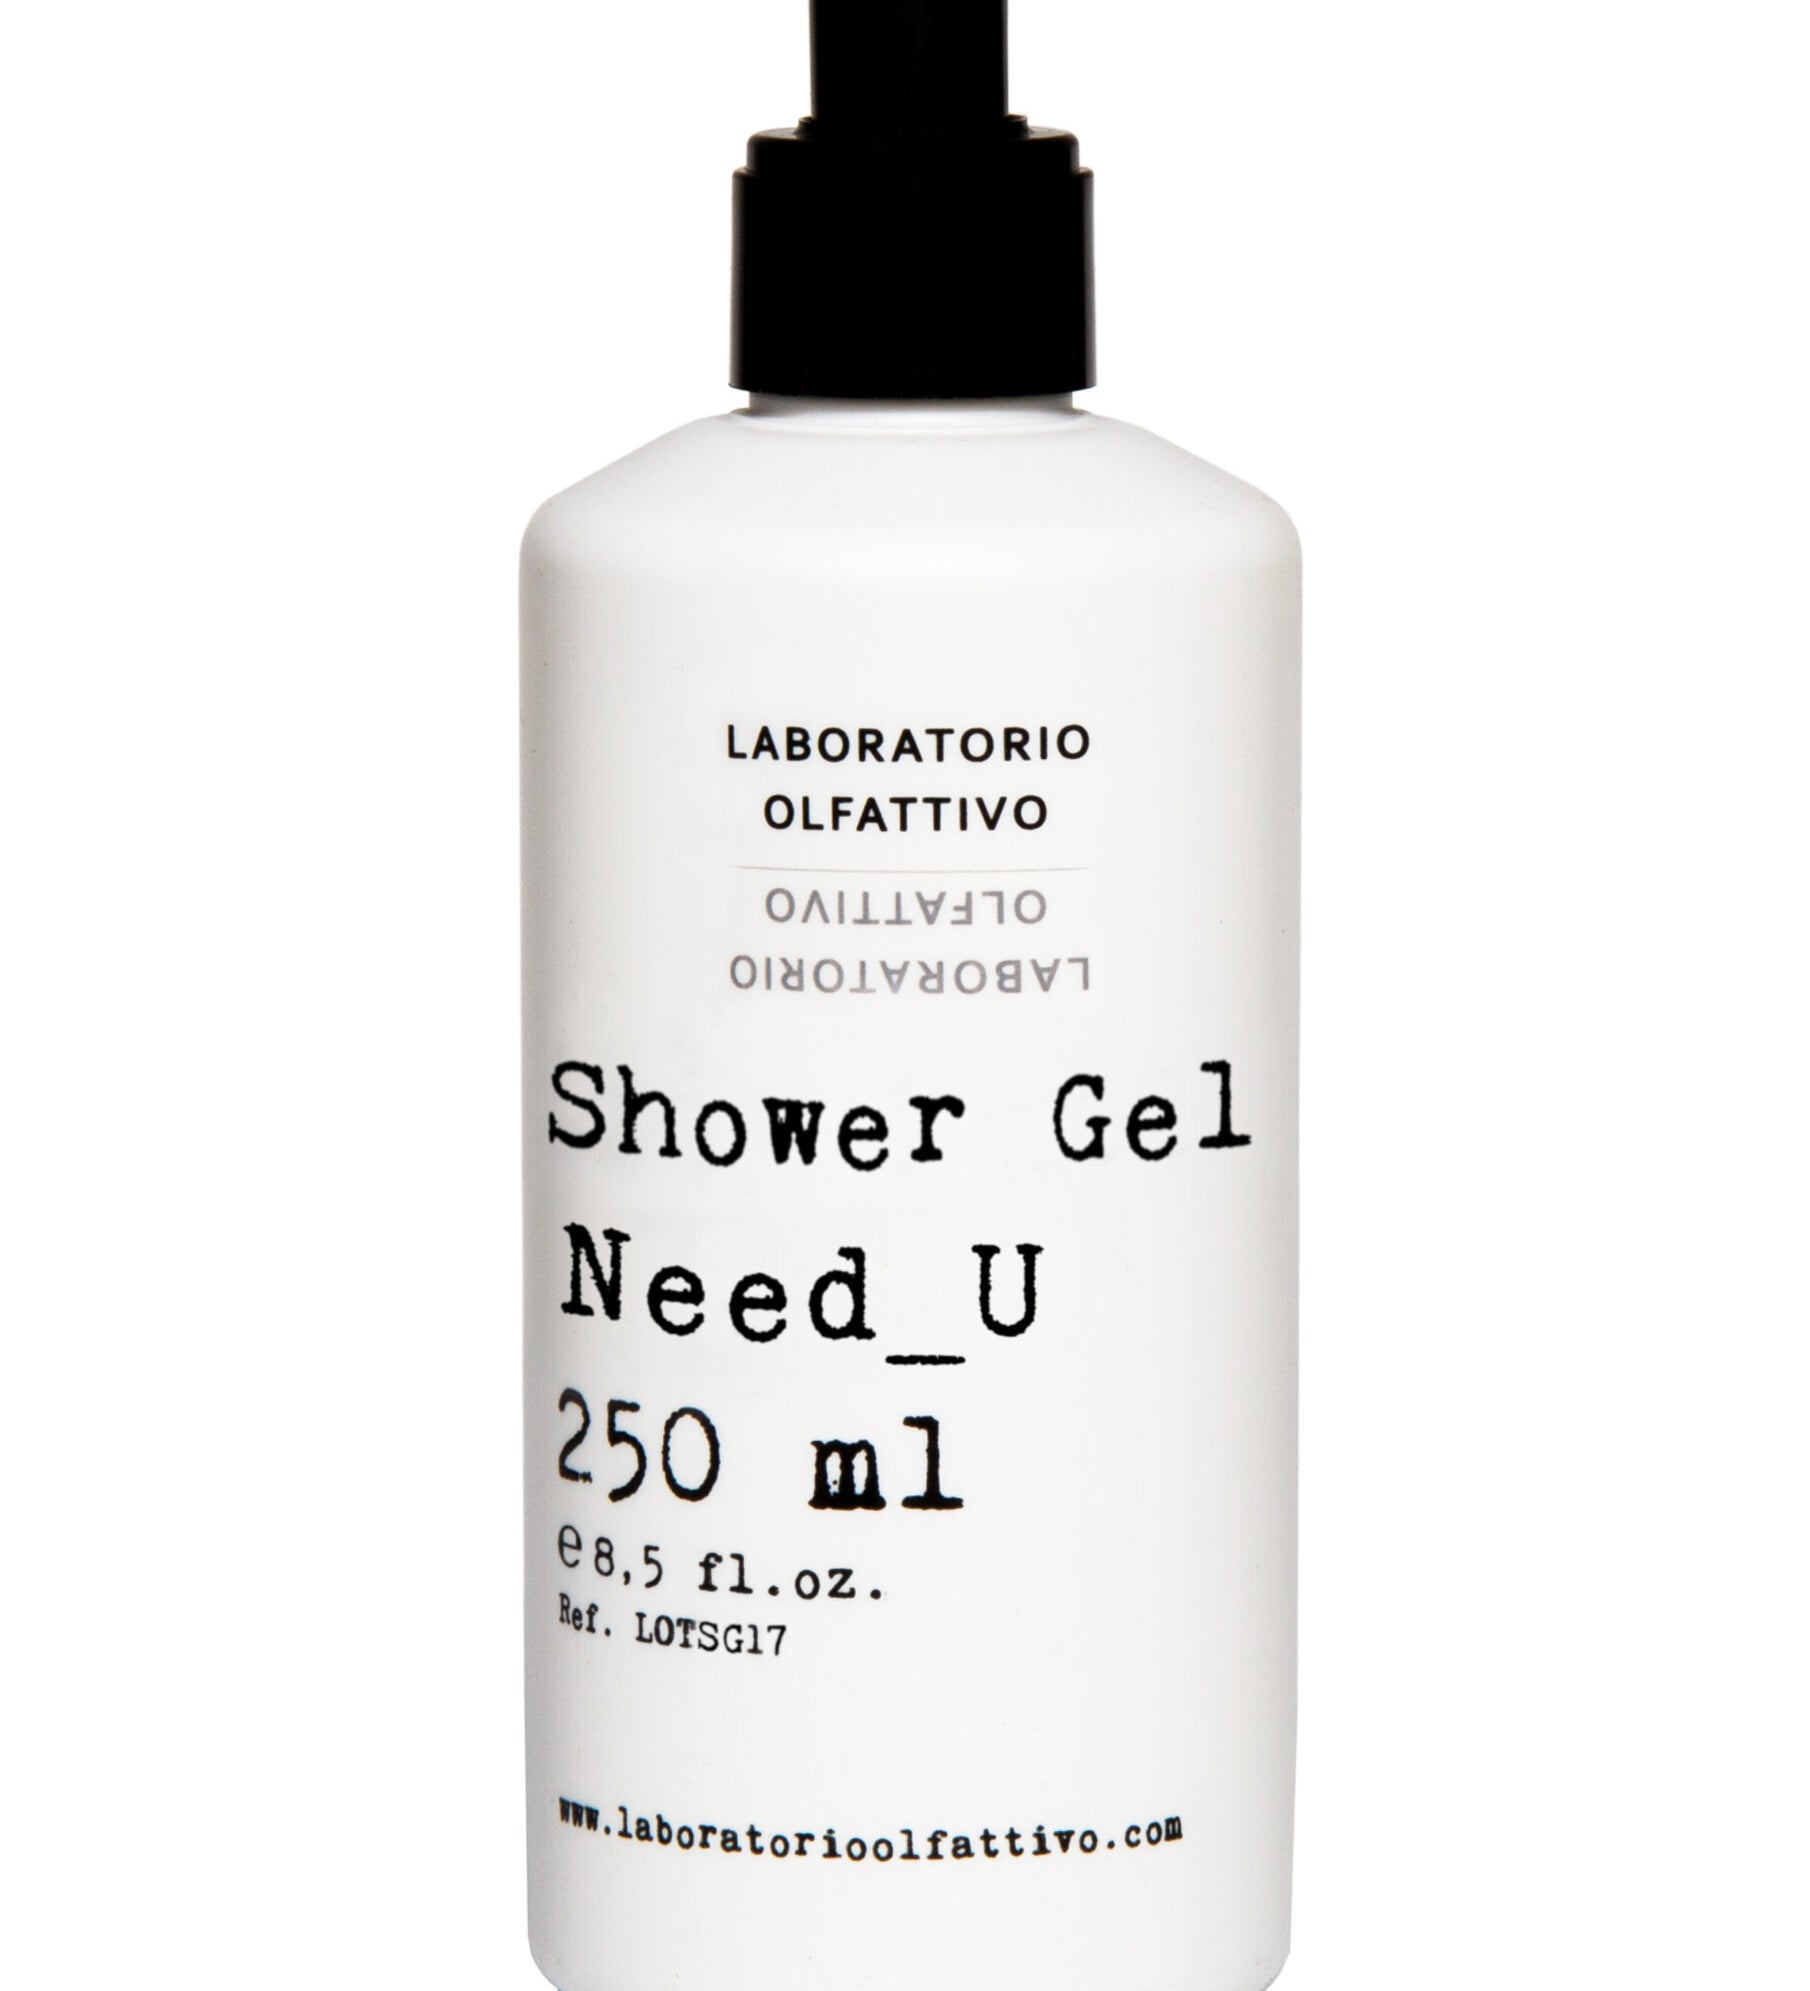 Shower-gel-Need-U-scaled.jpg